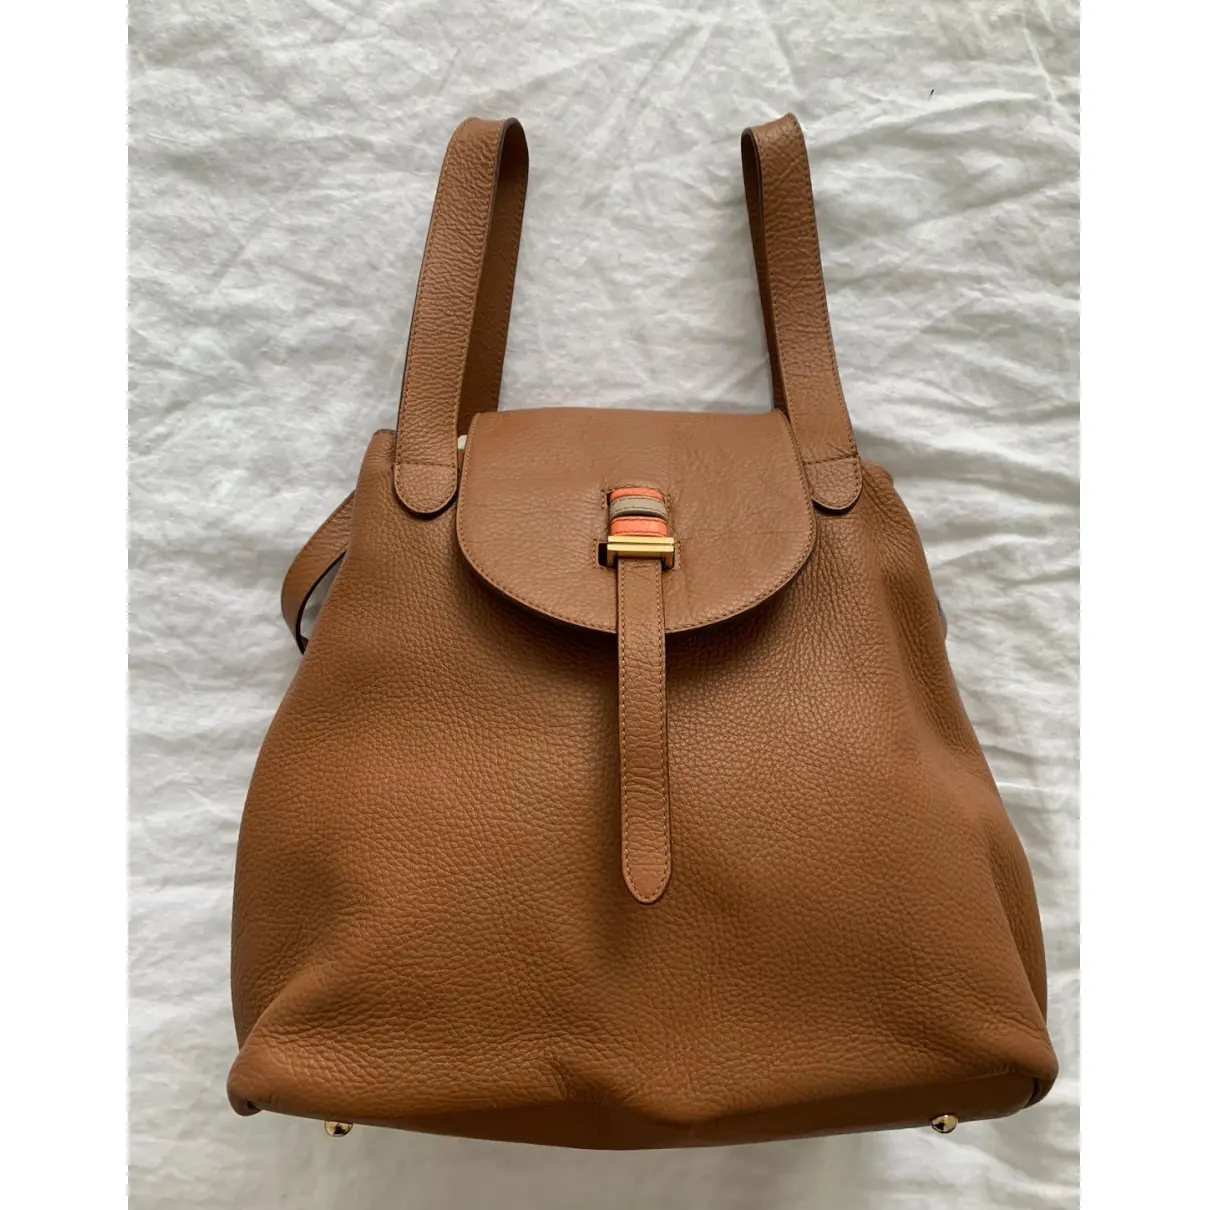 Leather handbag Meli Melo